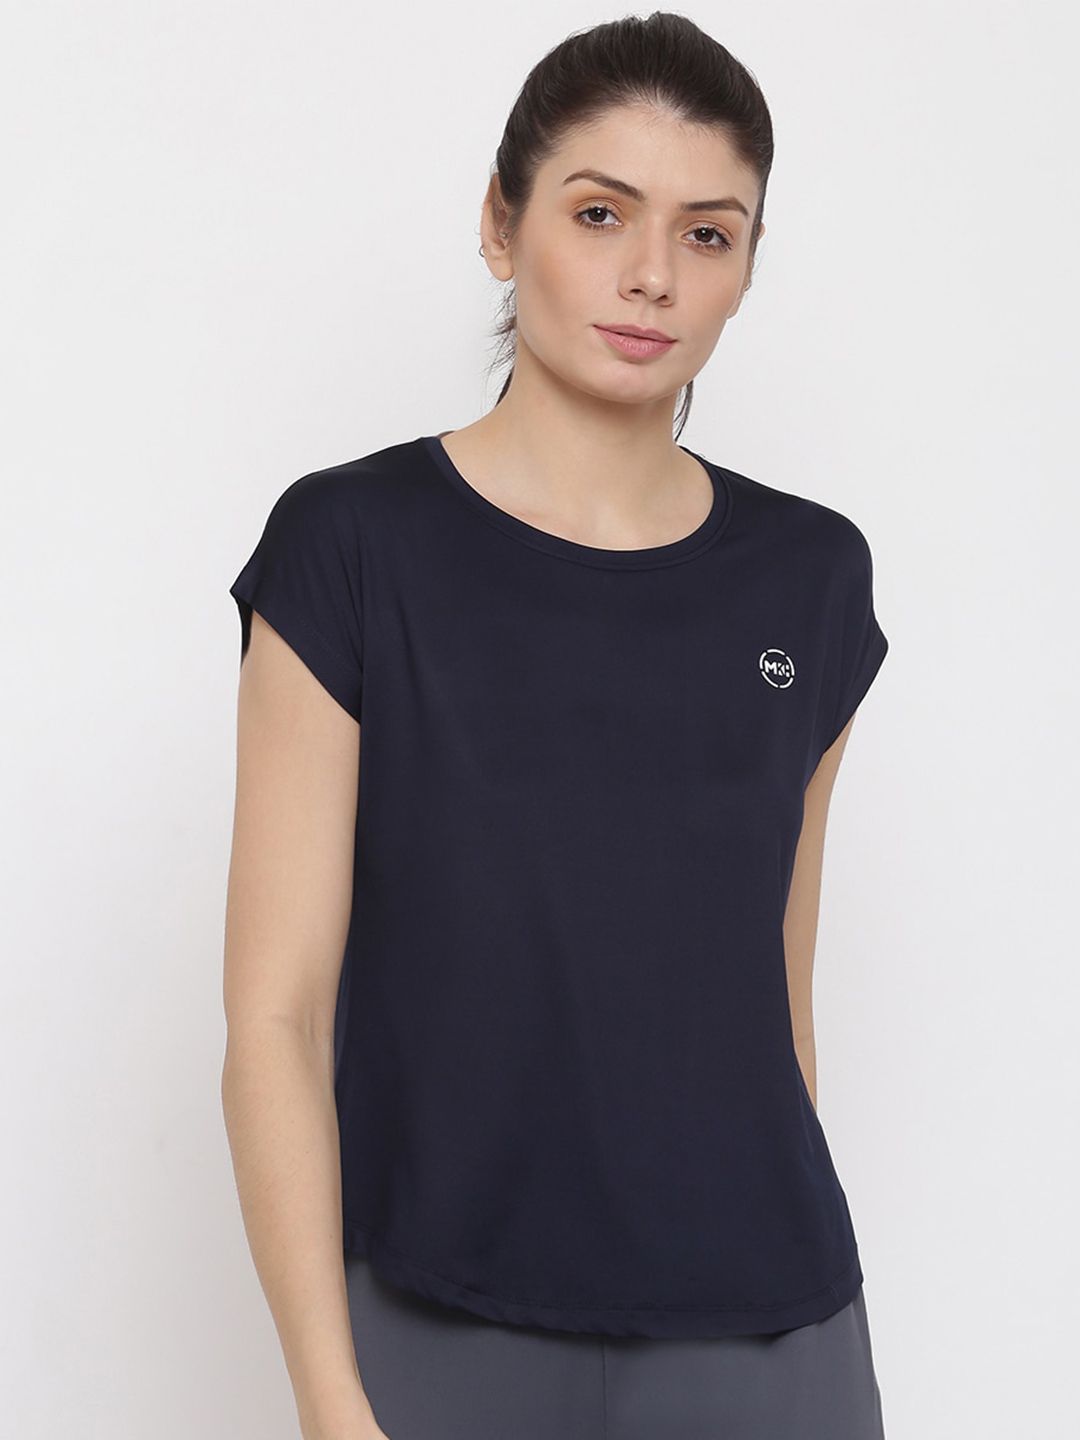 MKH Women Navy Blue Dri-FIT T-shirt Price in India